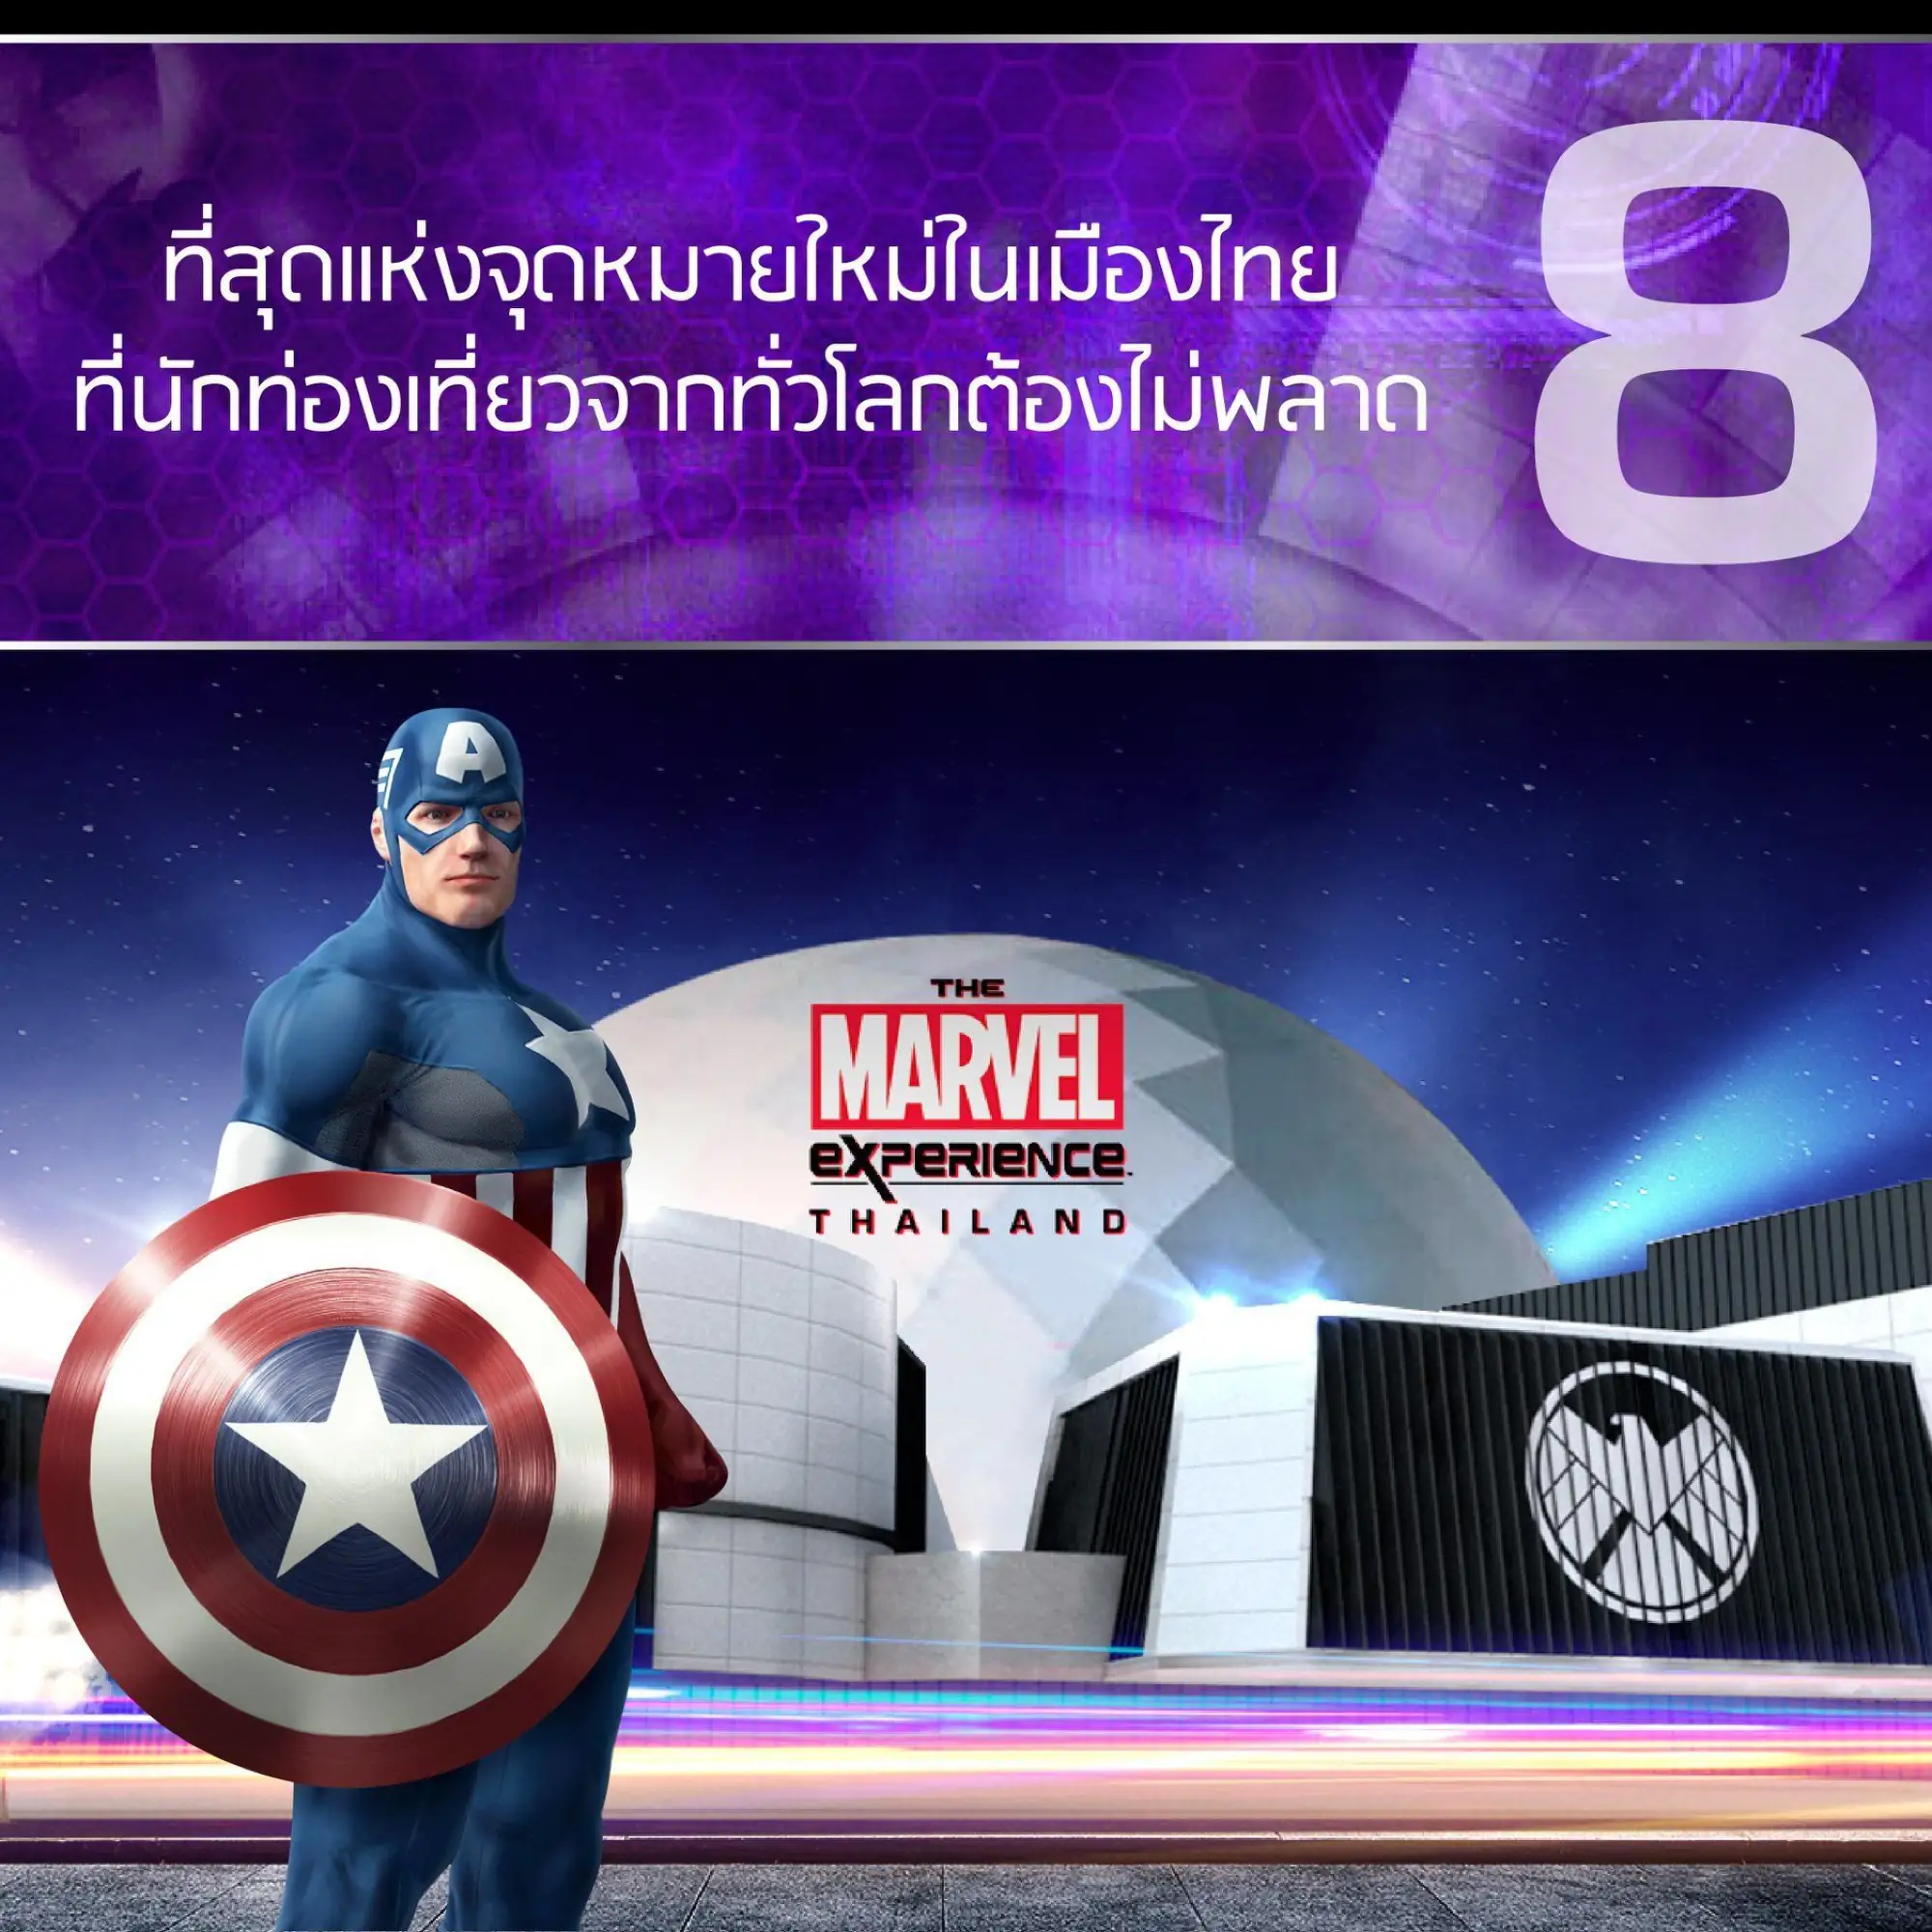 Marvel Experience thailand 泰國漫威基地 超級英雄 泰國 漫威基地 漫威基地 Marvel Experience